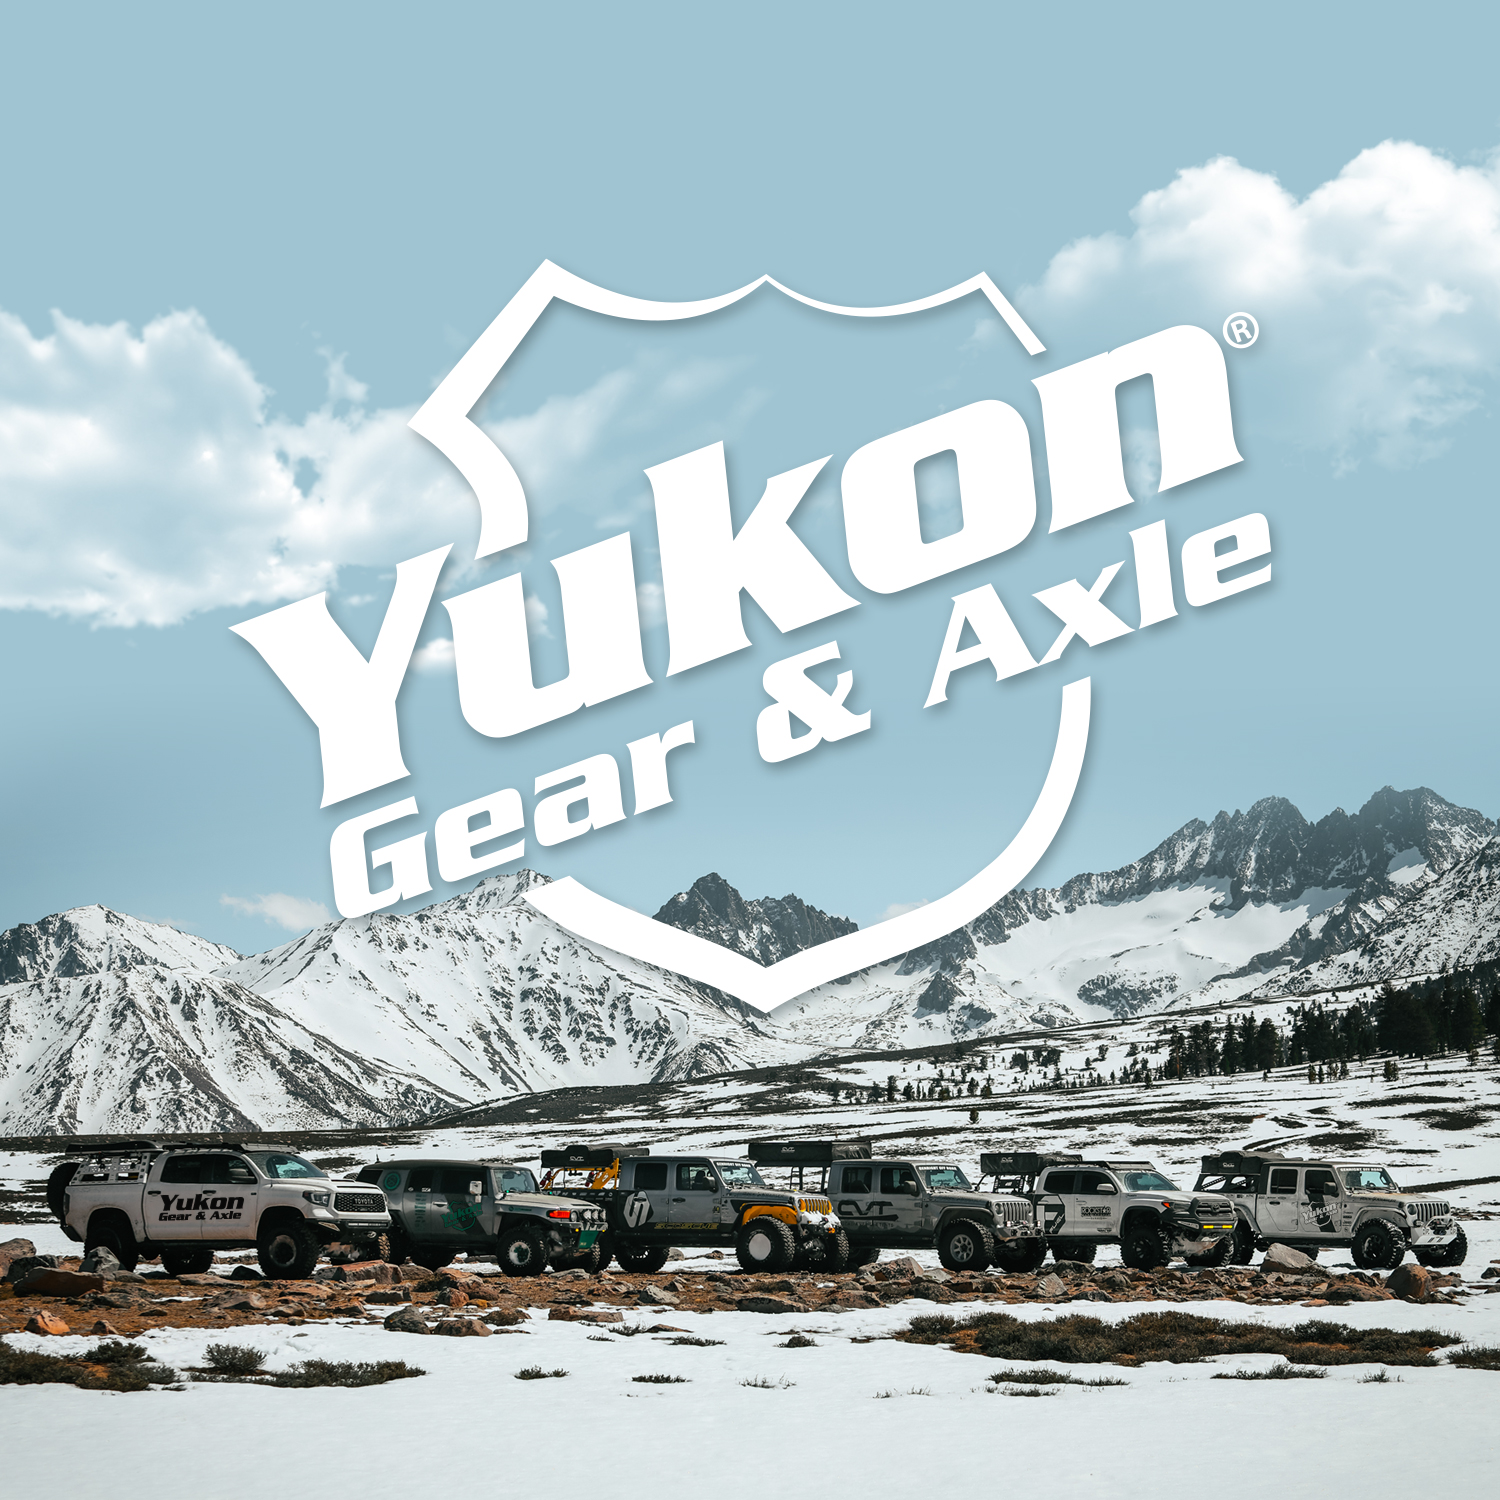 Yukon Gear & Install Kit, Dana 30 front & Dana 44 rear, Jeep TJ 4.56 ratio 